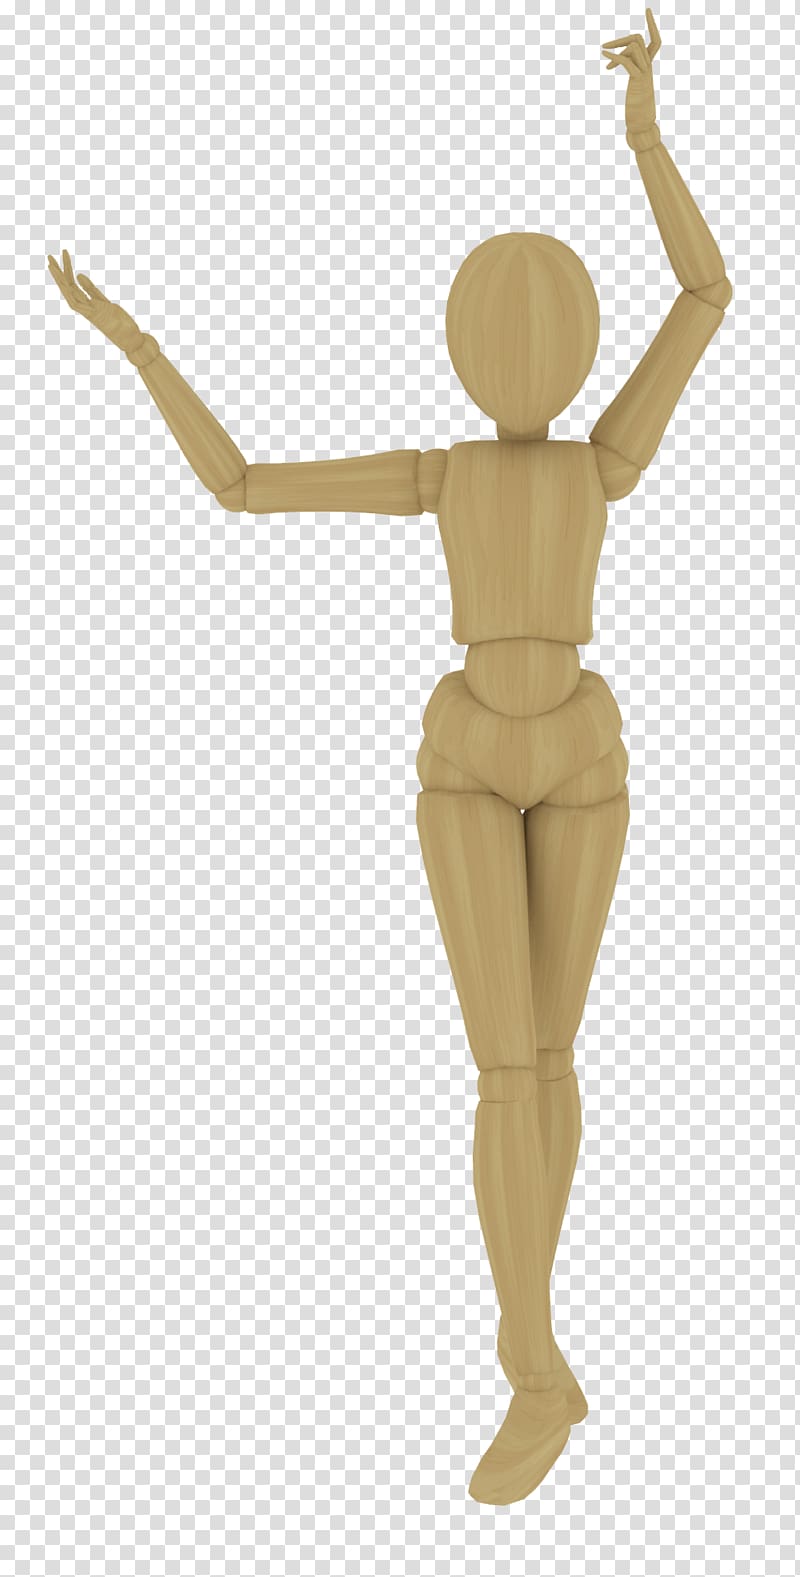 Mannequin Peg wooden doll Model Clothing, mannequin transparent background PNG clipart